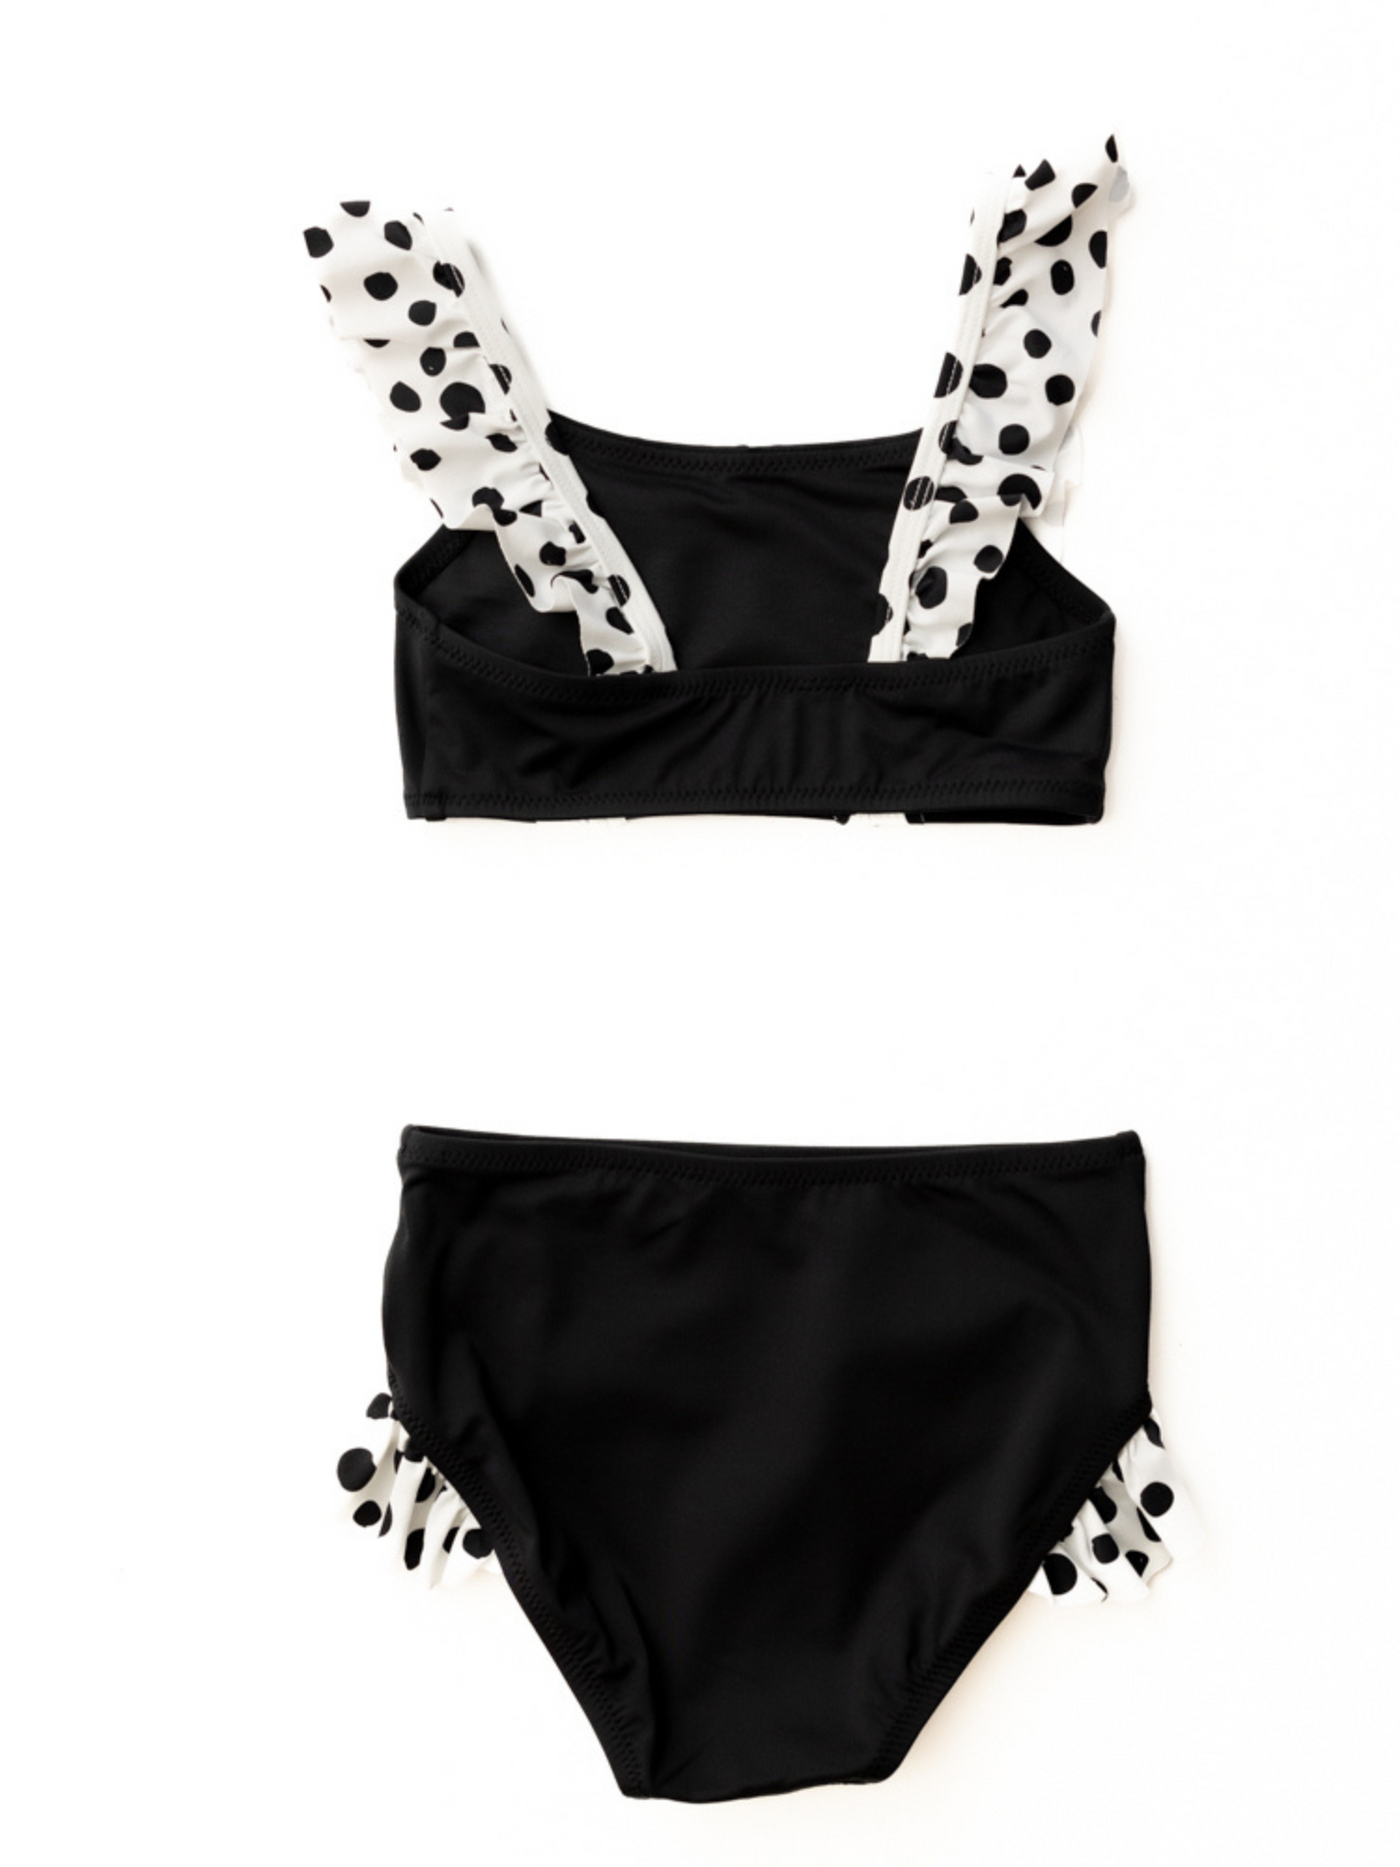 Girl's Dalmatians on Vacation Ruffle Bikini